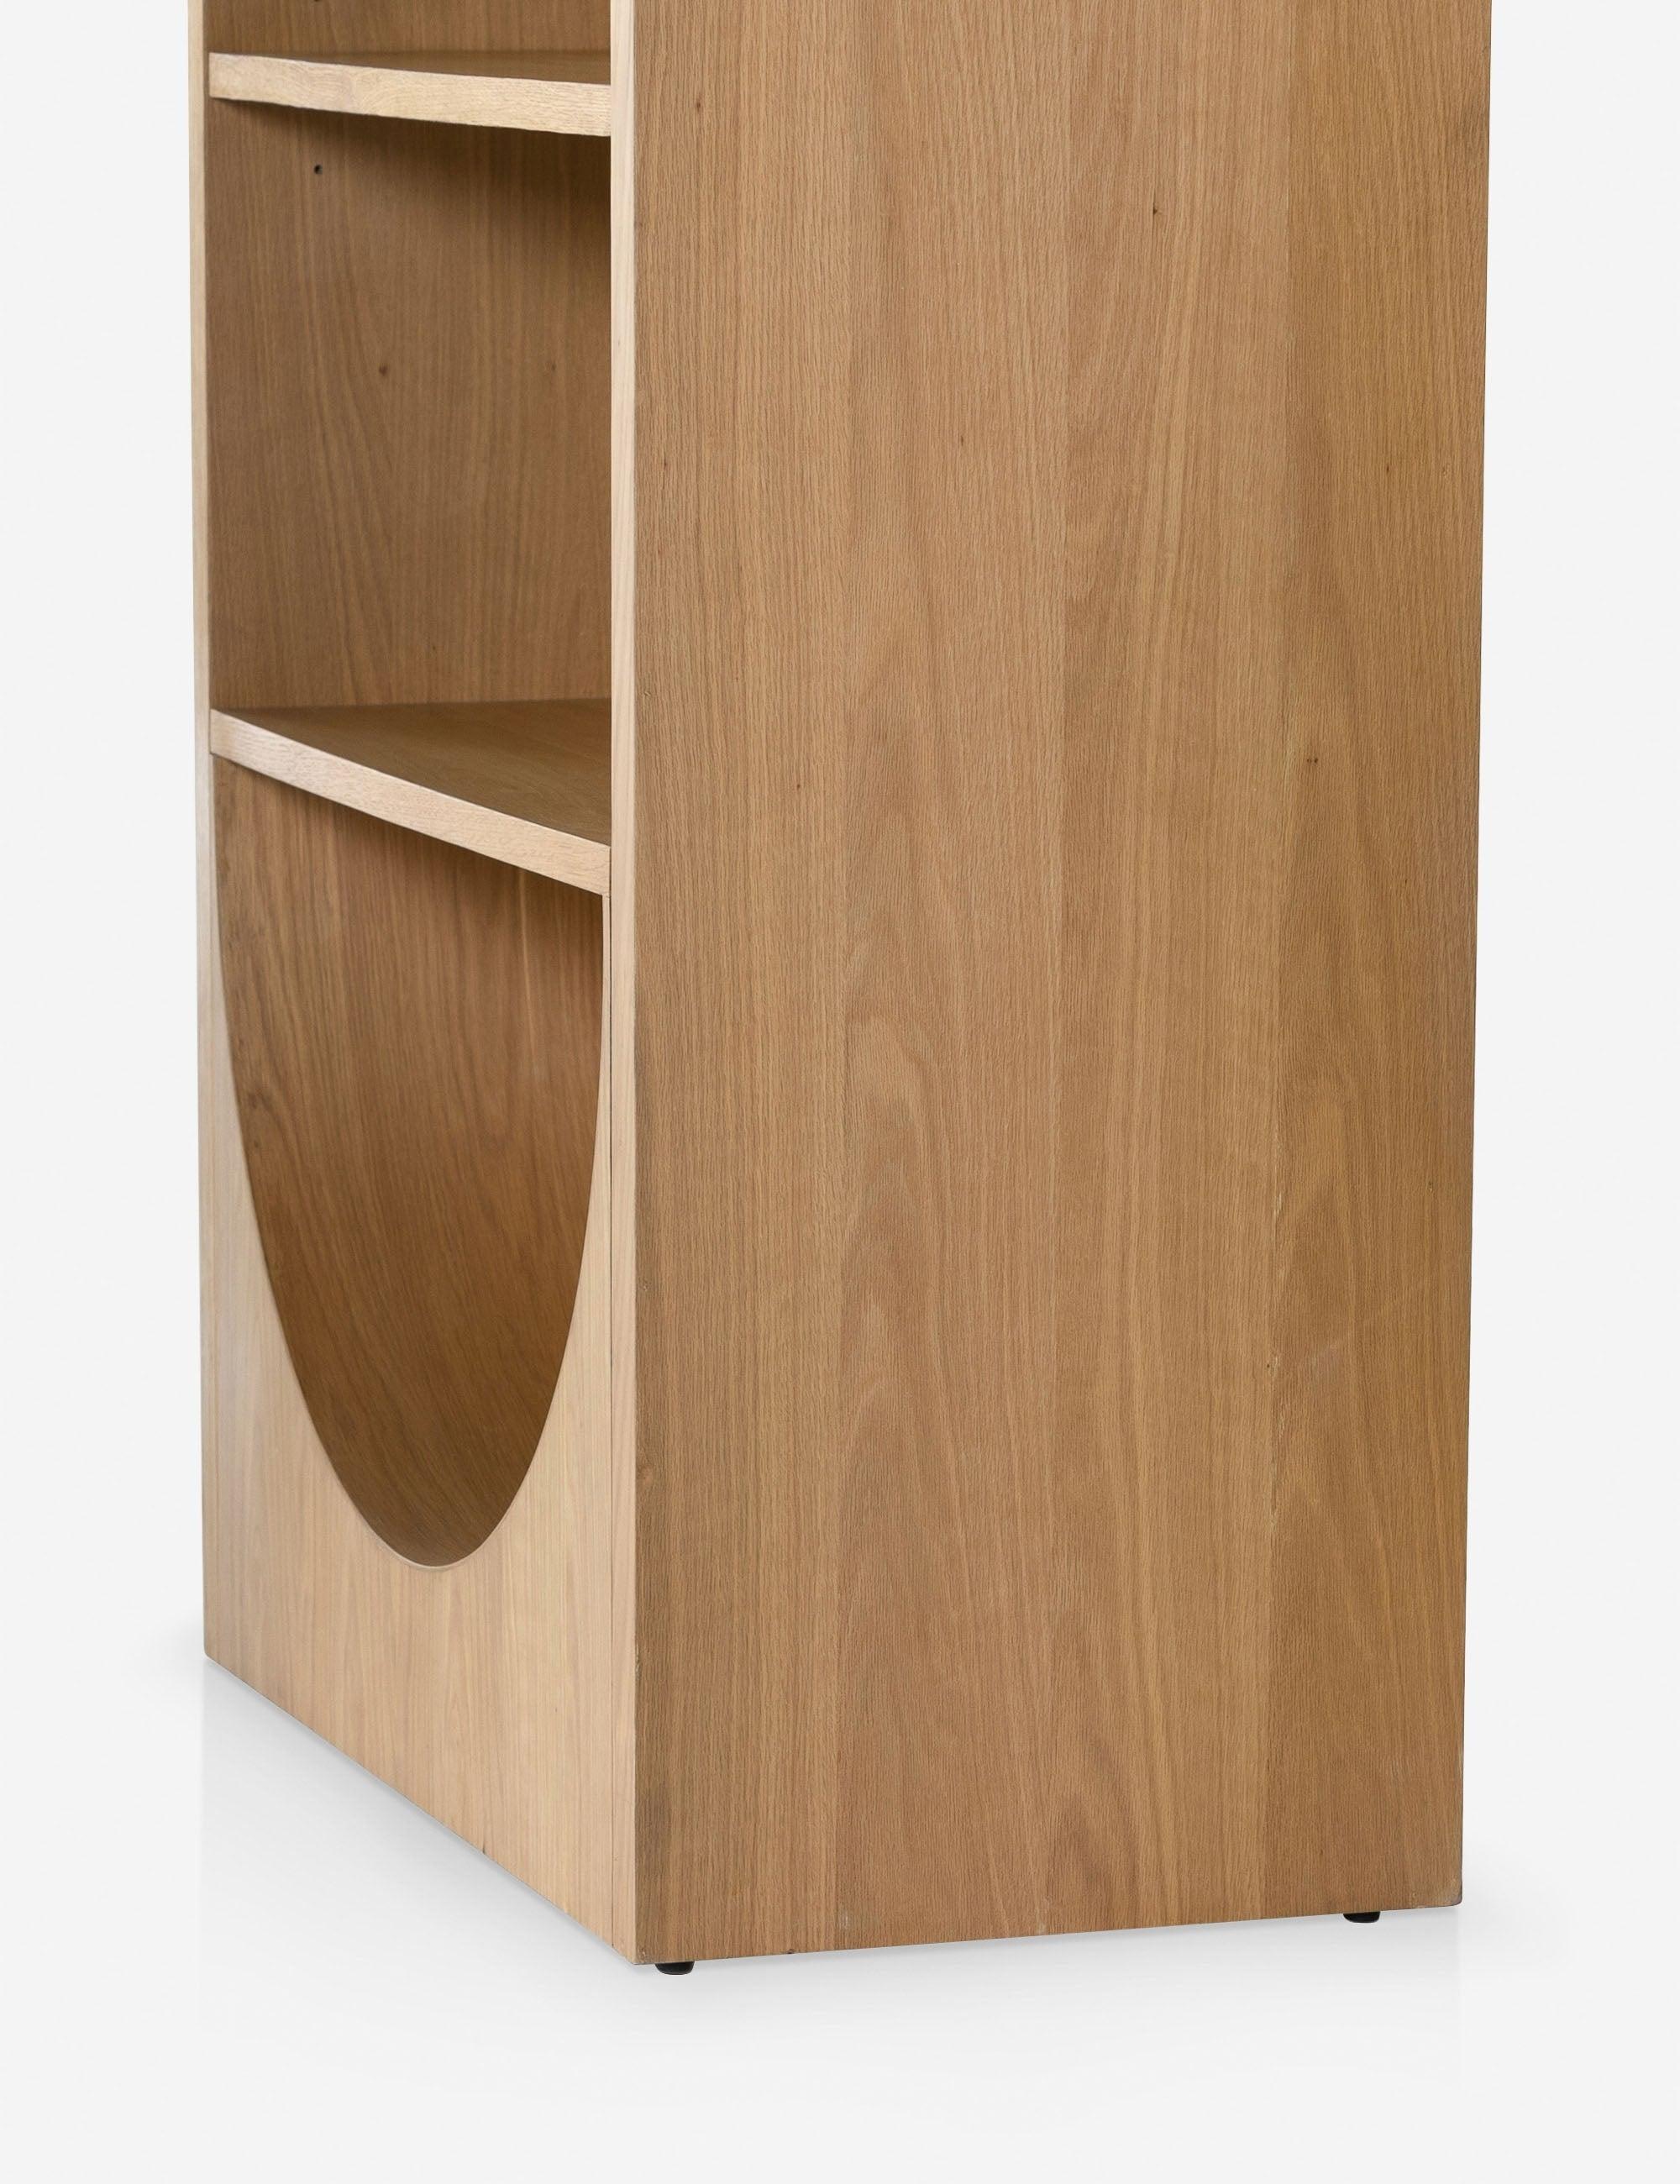 Honey Oak Veneer Adjustable Bookcase with Handwoven Cane Paneling